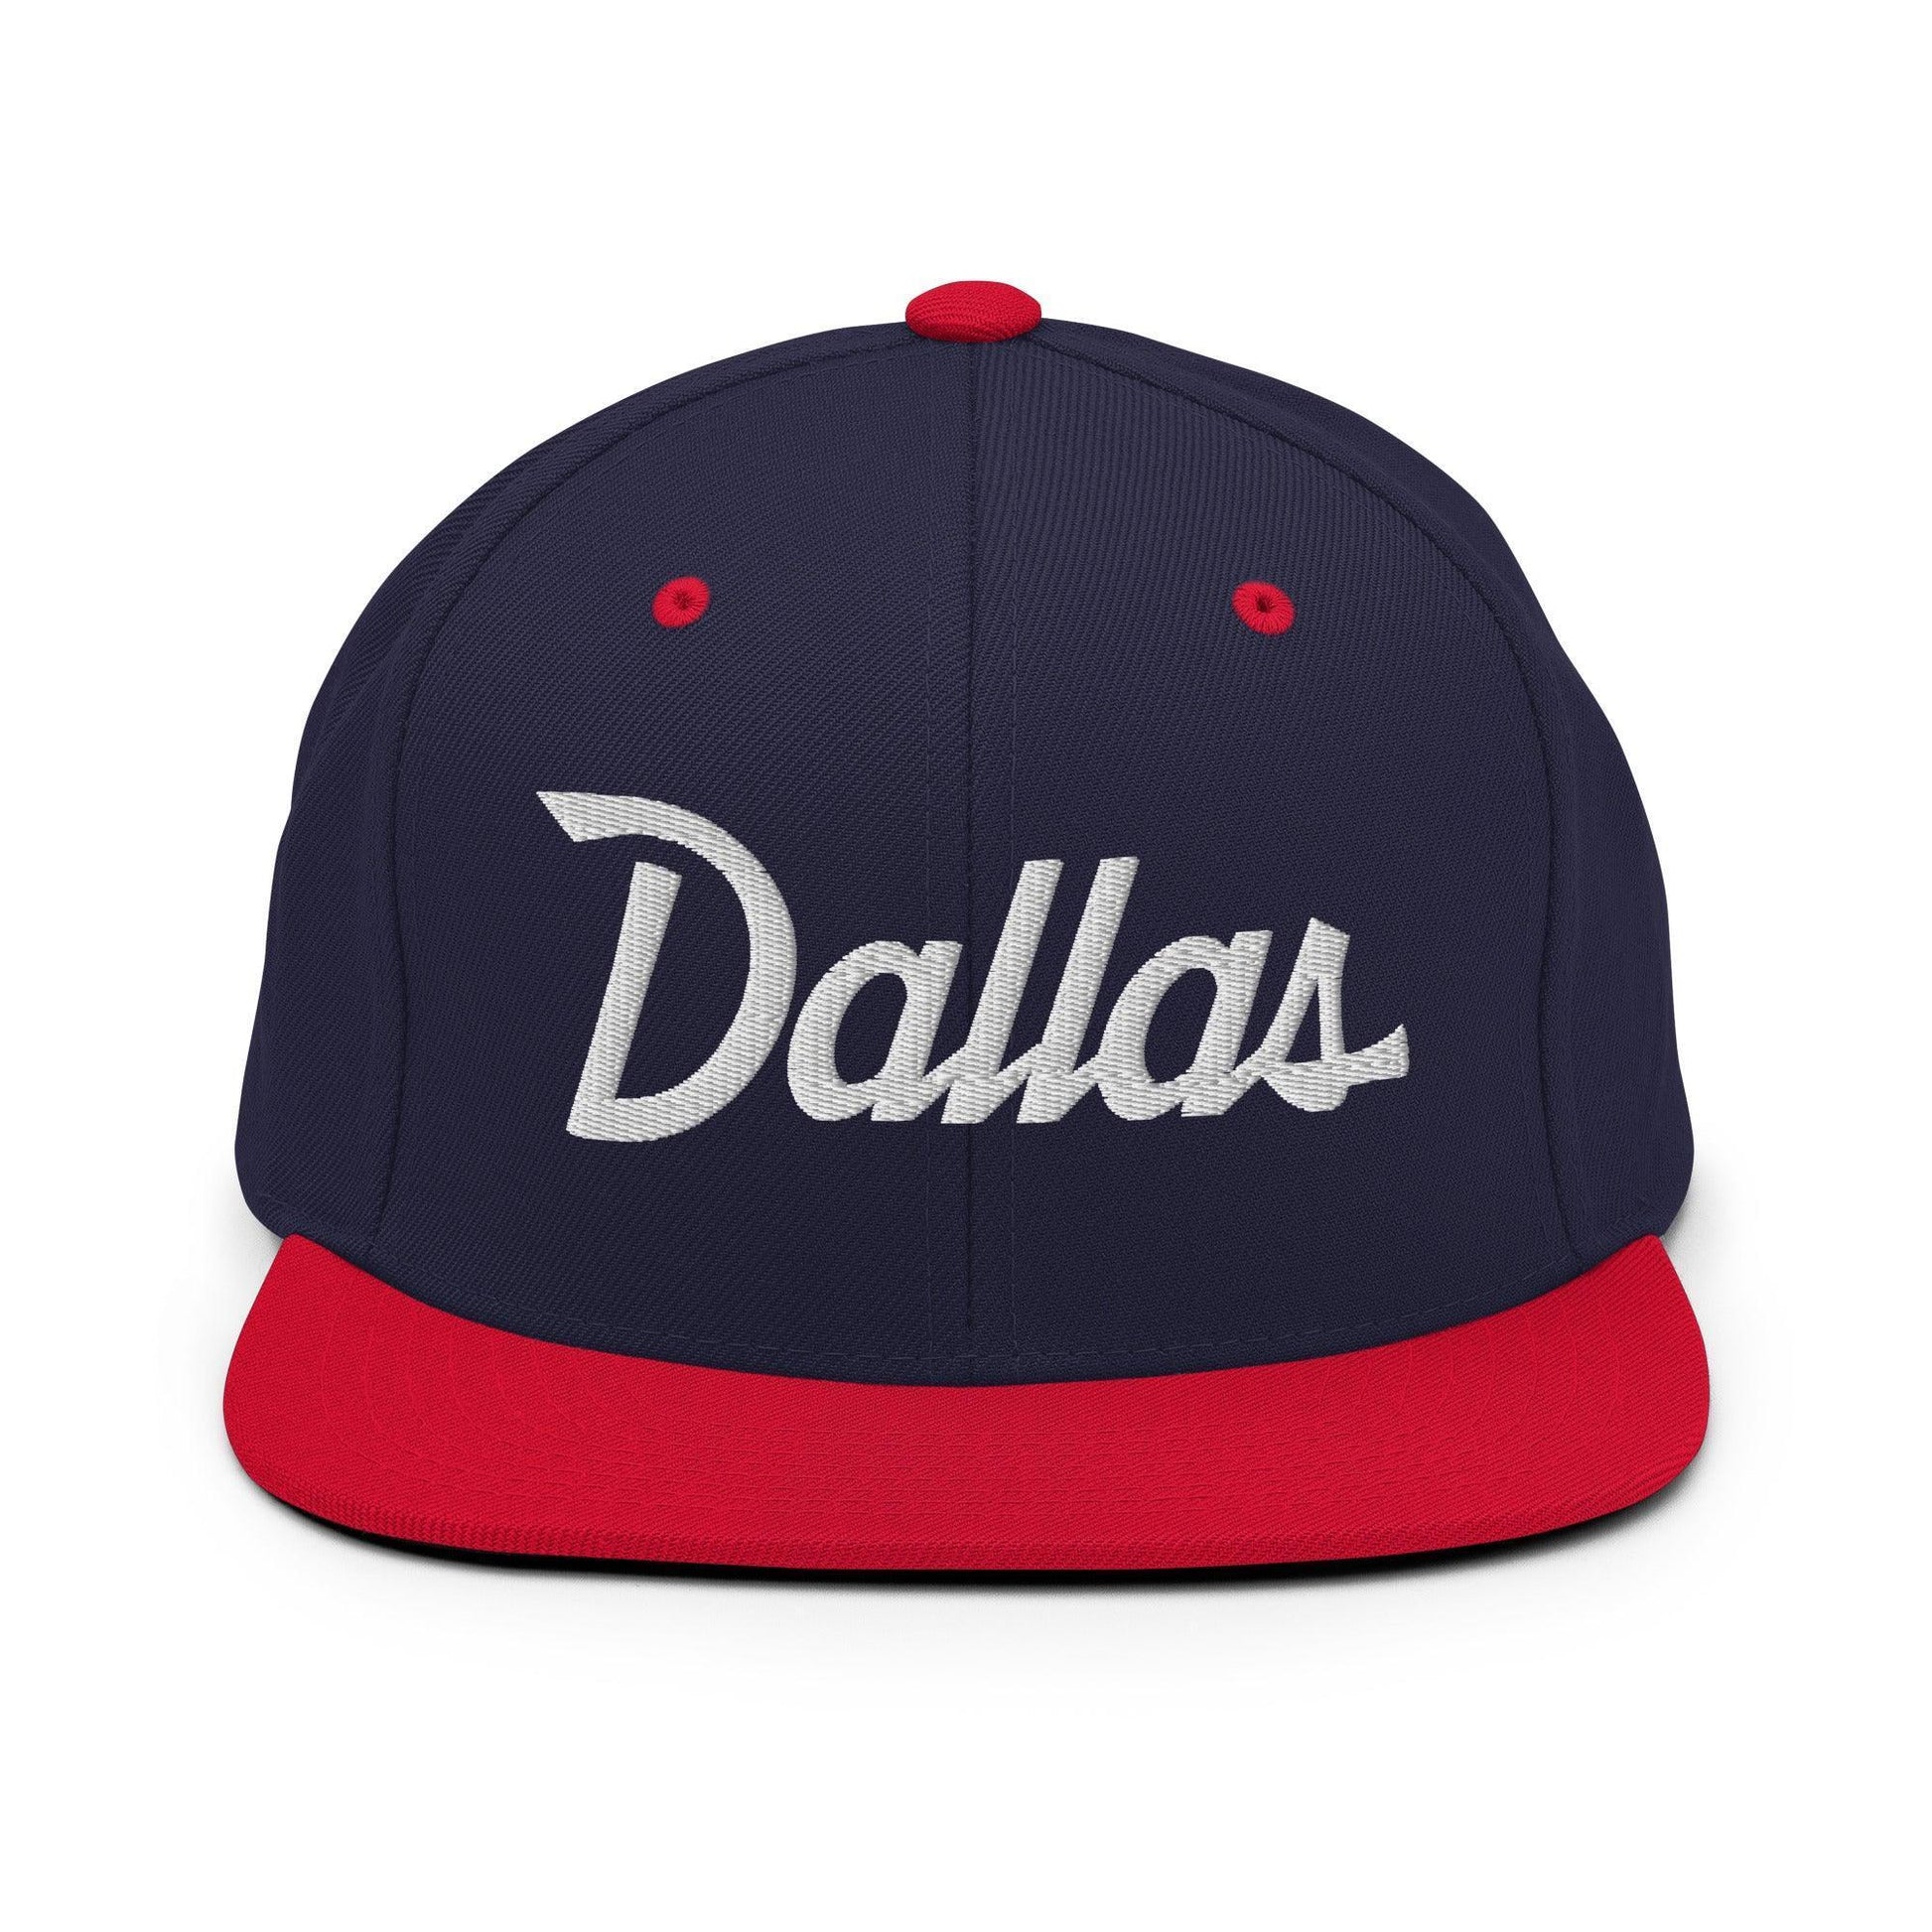 Dallas Script Snapback Hat Navy Red